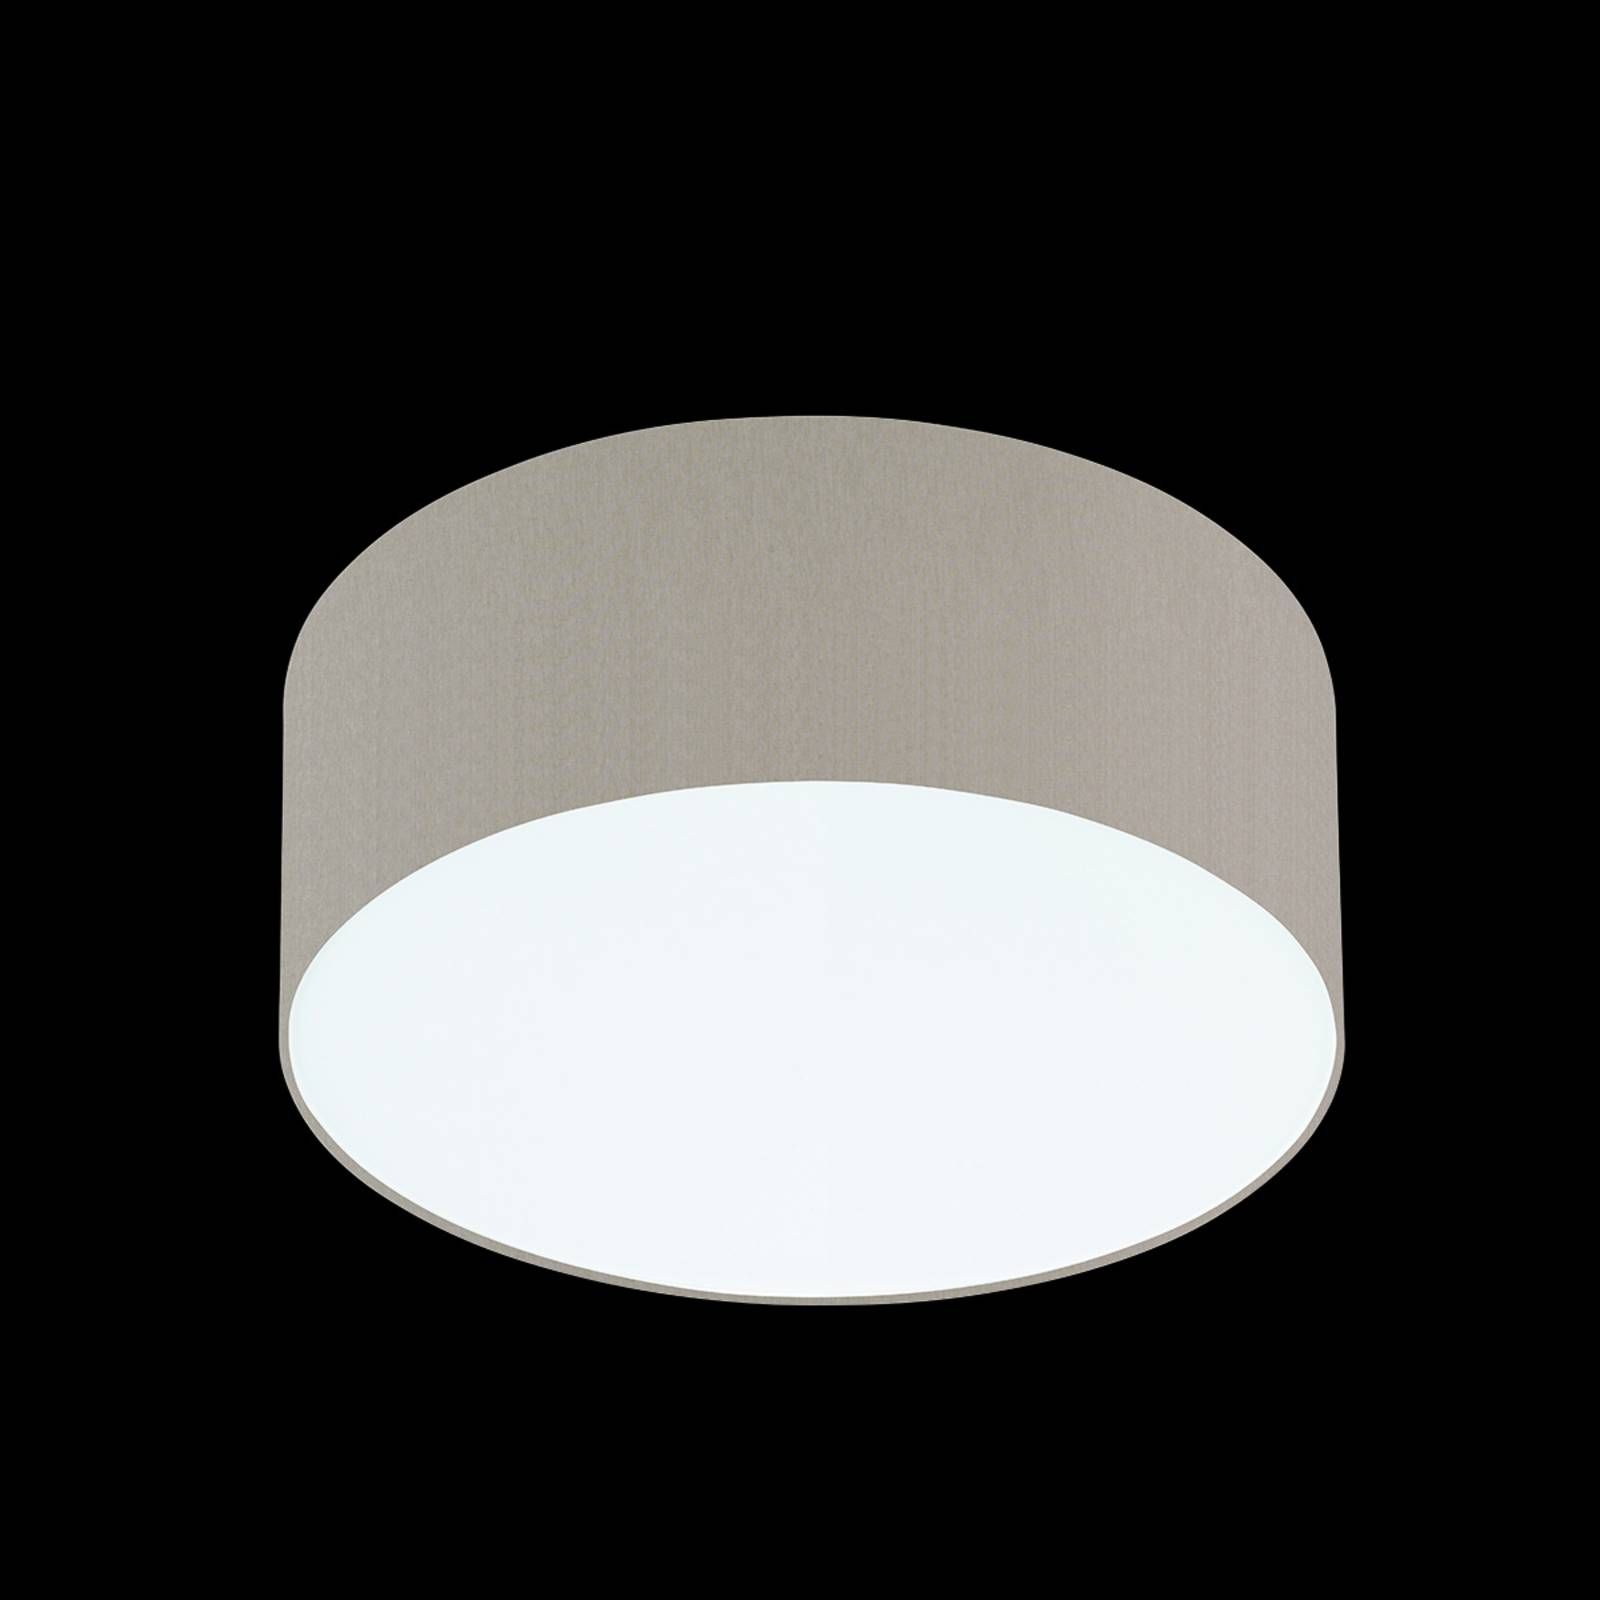 Hufnagel Melanžovo-hnedé stropné svietidlo Mara, 40 cm, Obývacia izba / jedáleň, chinc, E27, 57W, K: 17cm